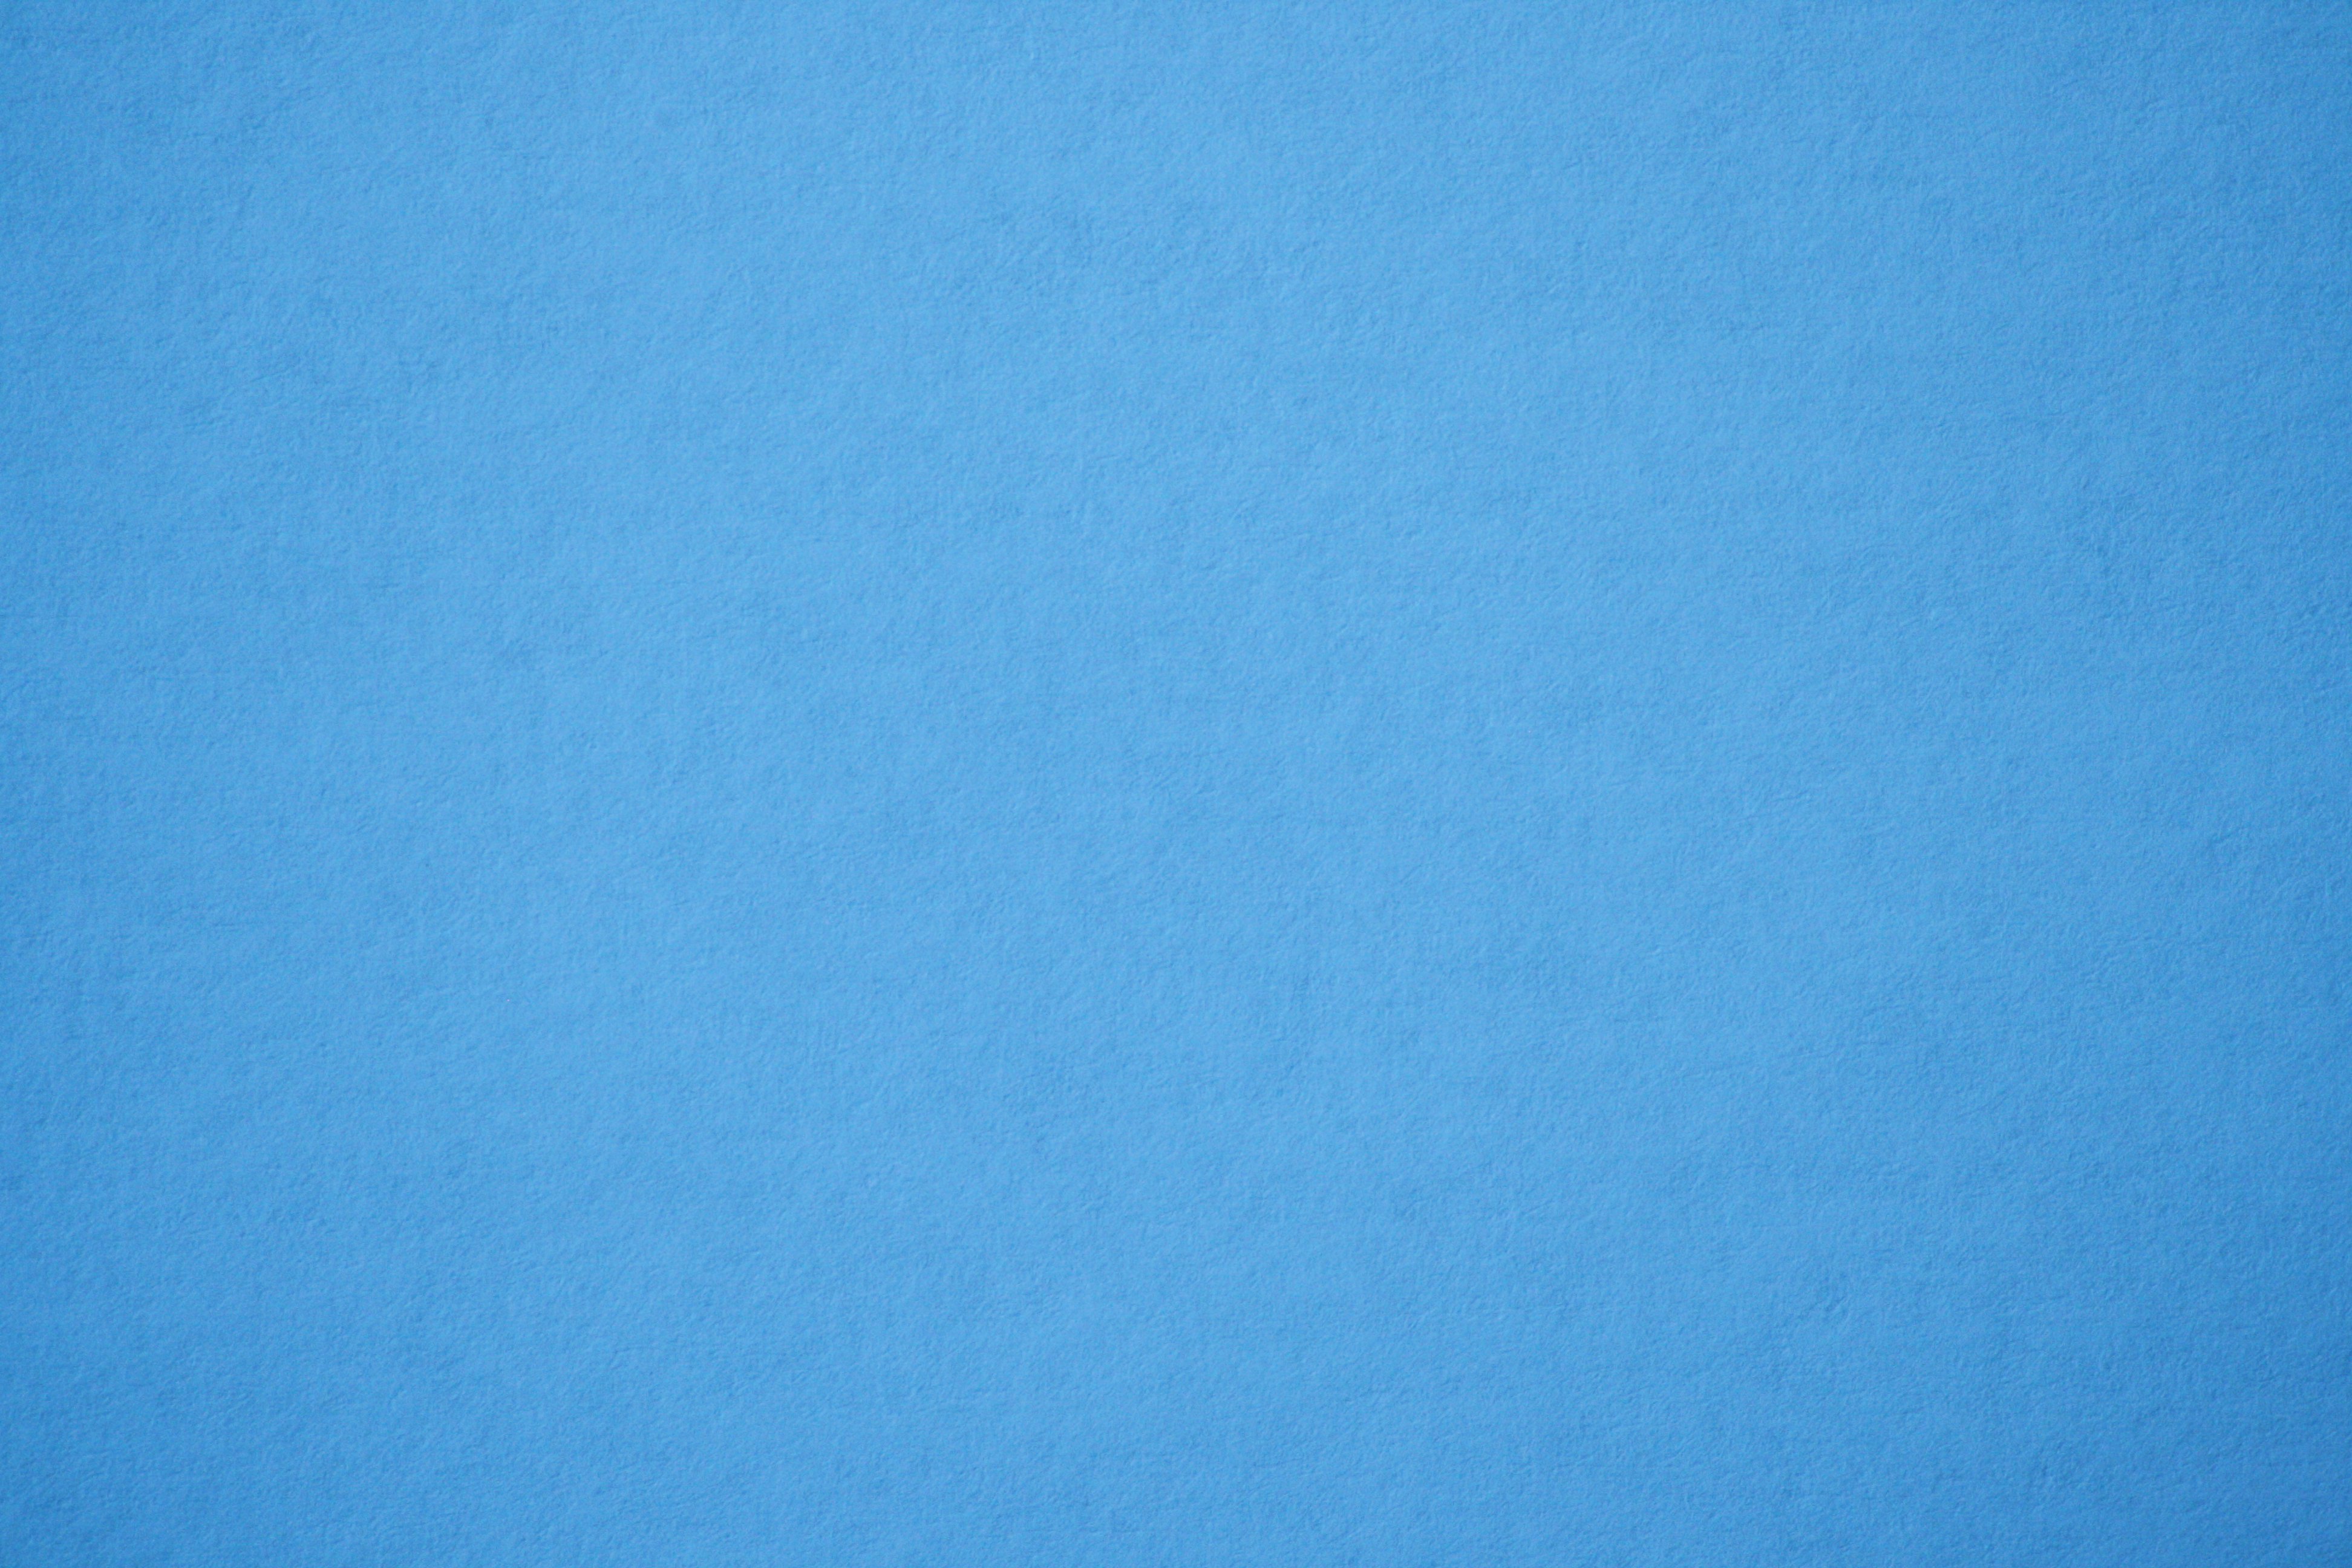 Light Blue Paper Texture Picture, Free Photograph